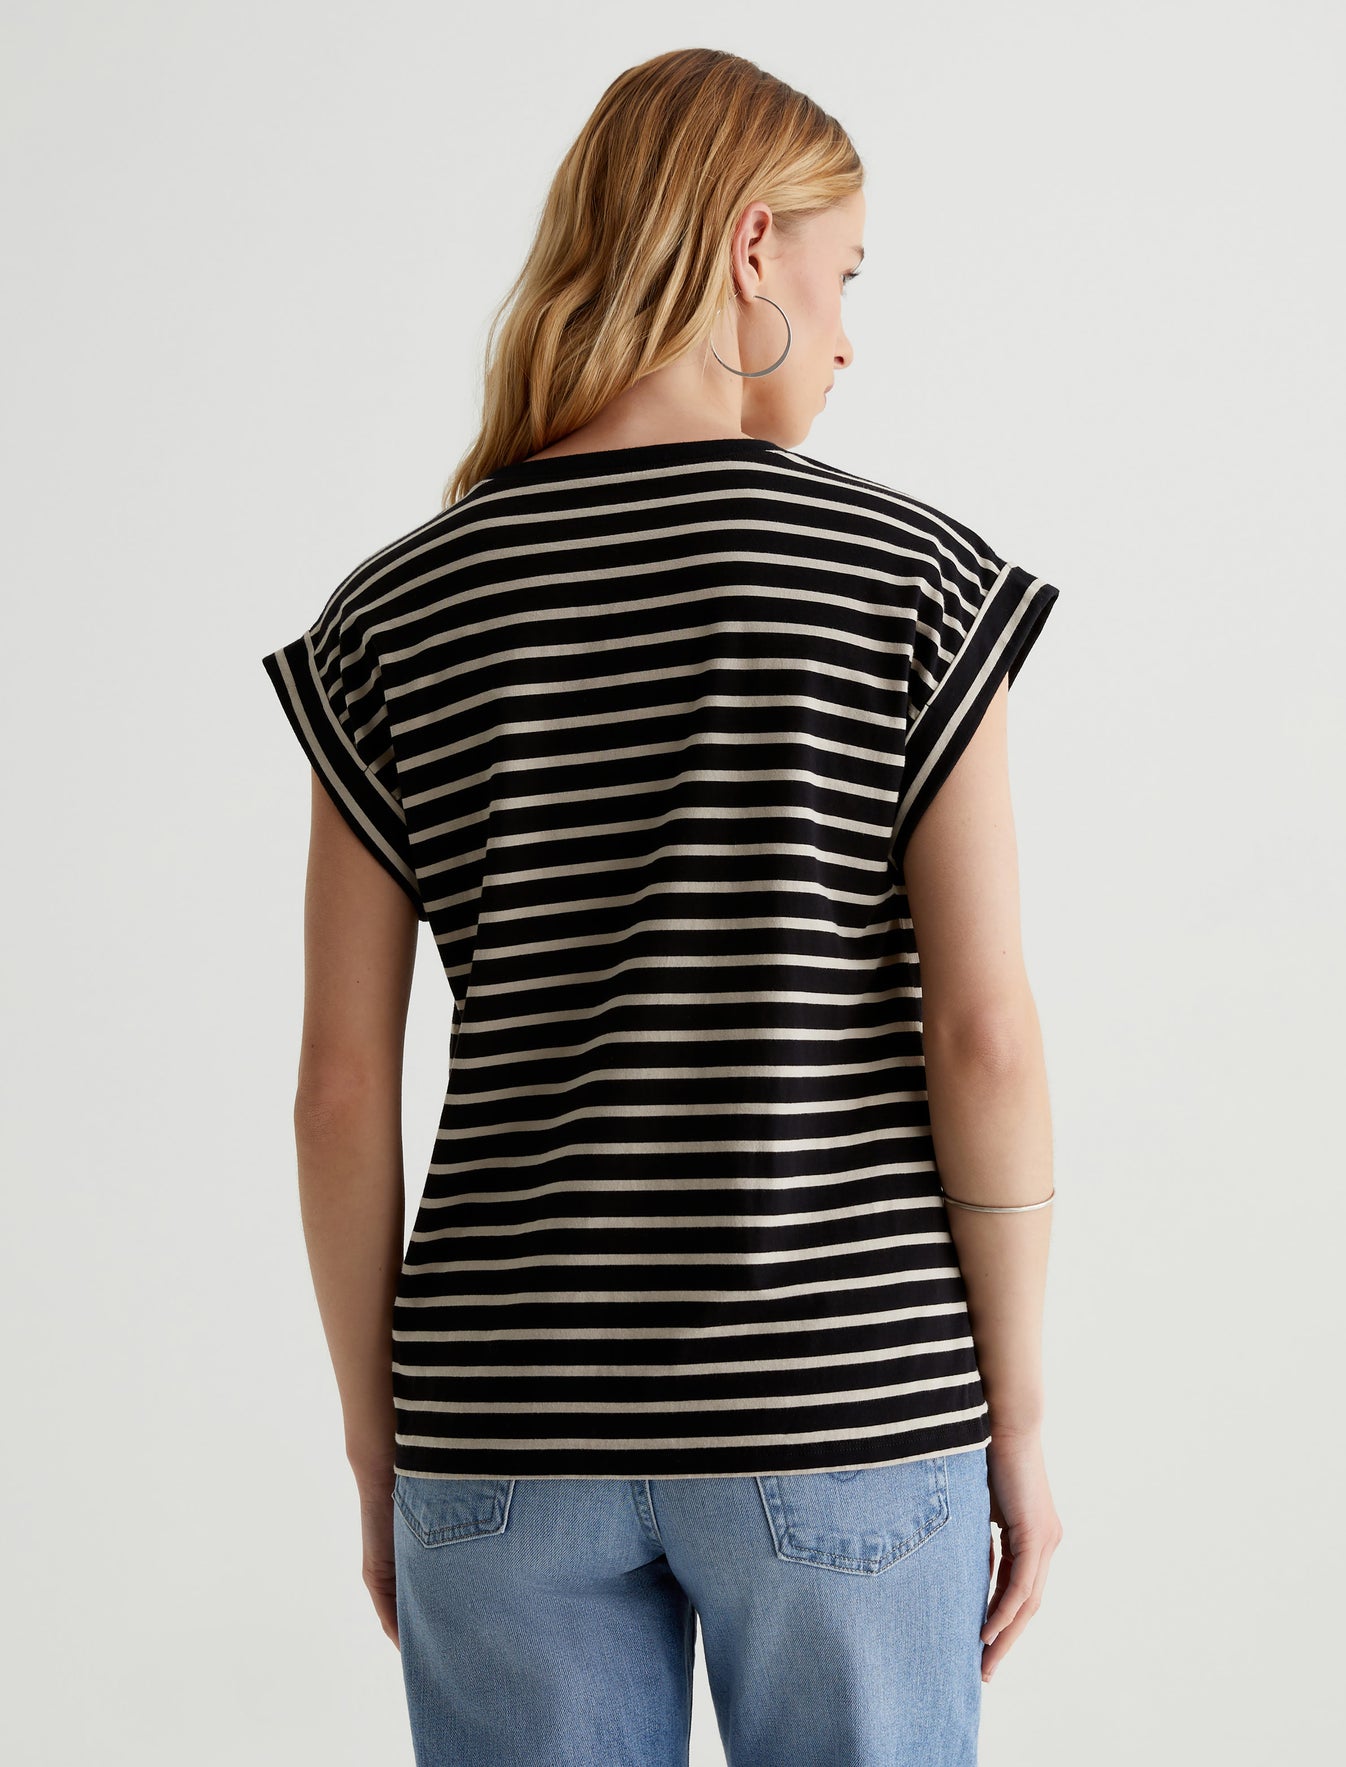 Rowan Coastal Stripe True Black/Flax Relaxed Rolled Sleeve T-Shirt Women Top Photo 7